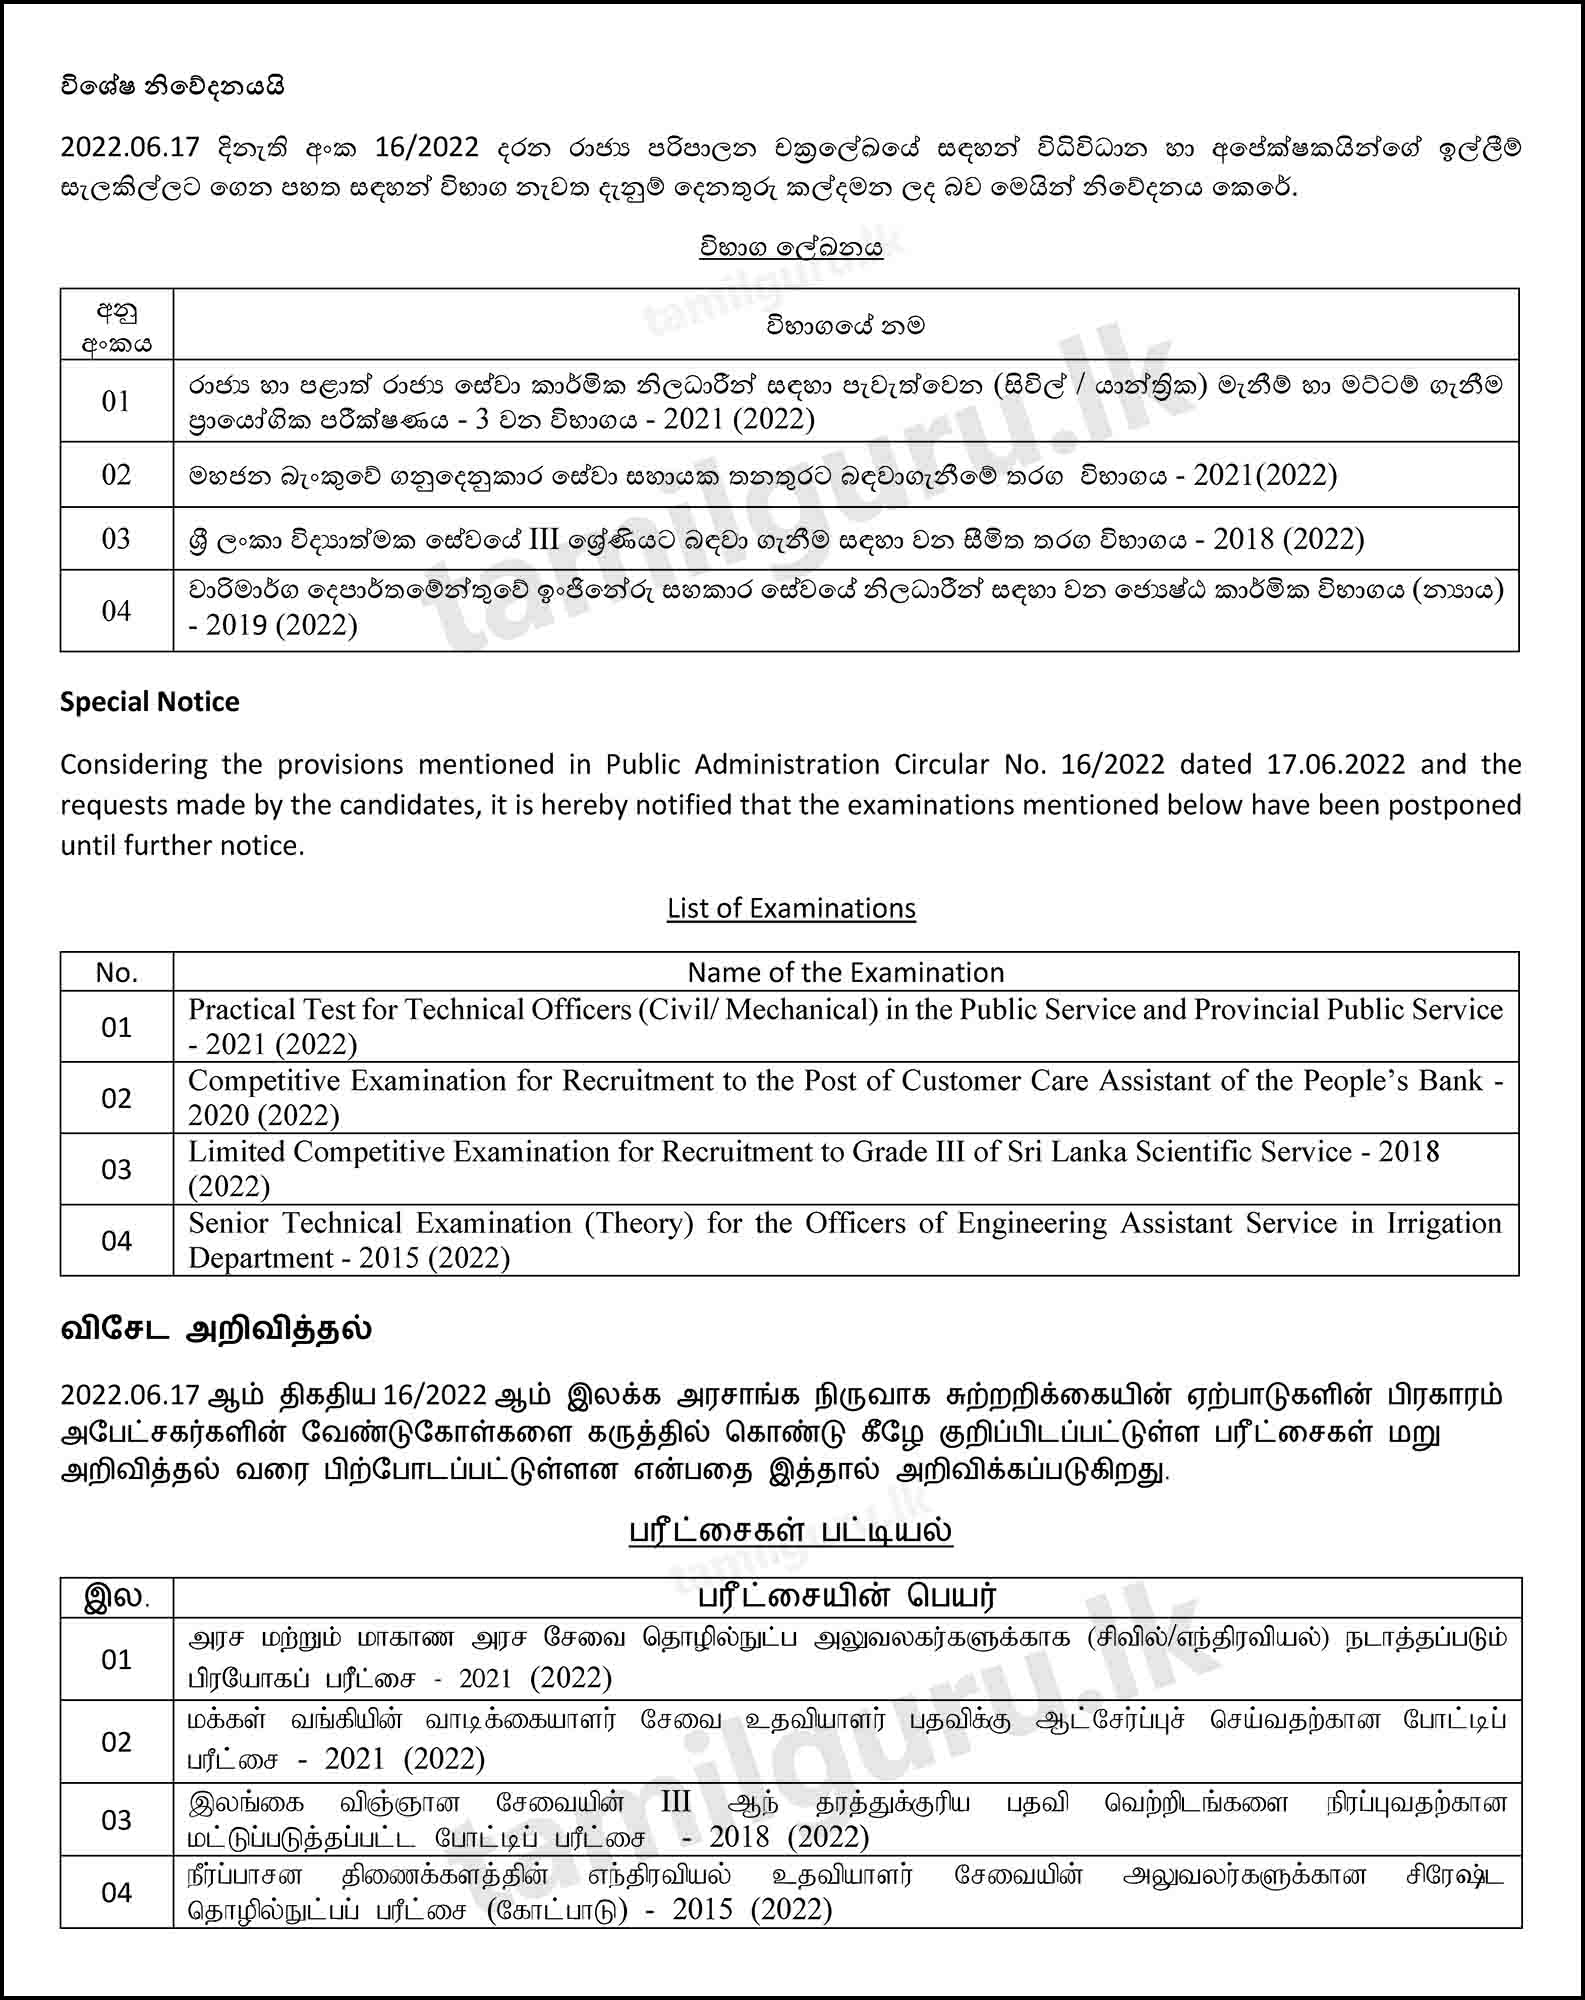 Special Notice on Postponement of Examinations (June 2022) - Department of Examinations